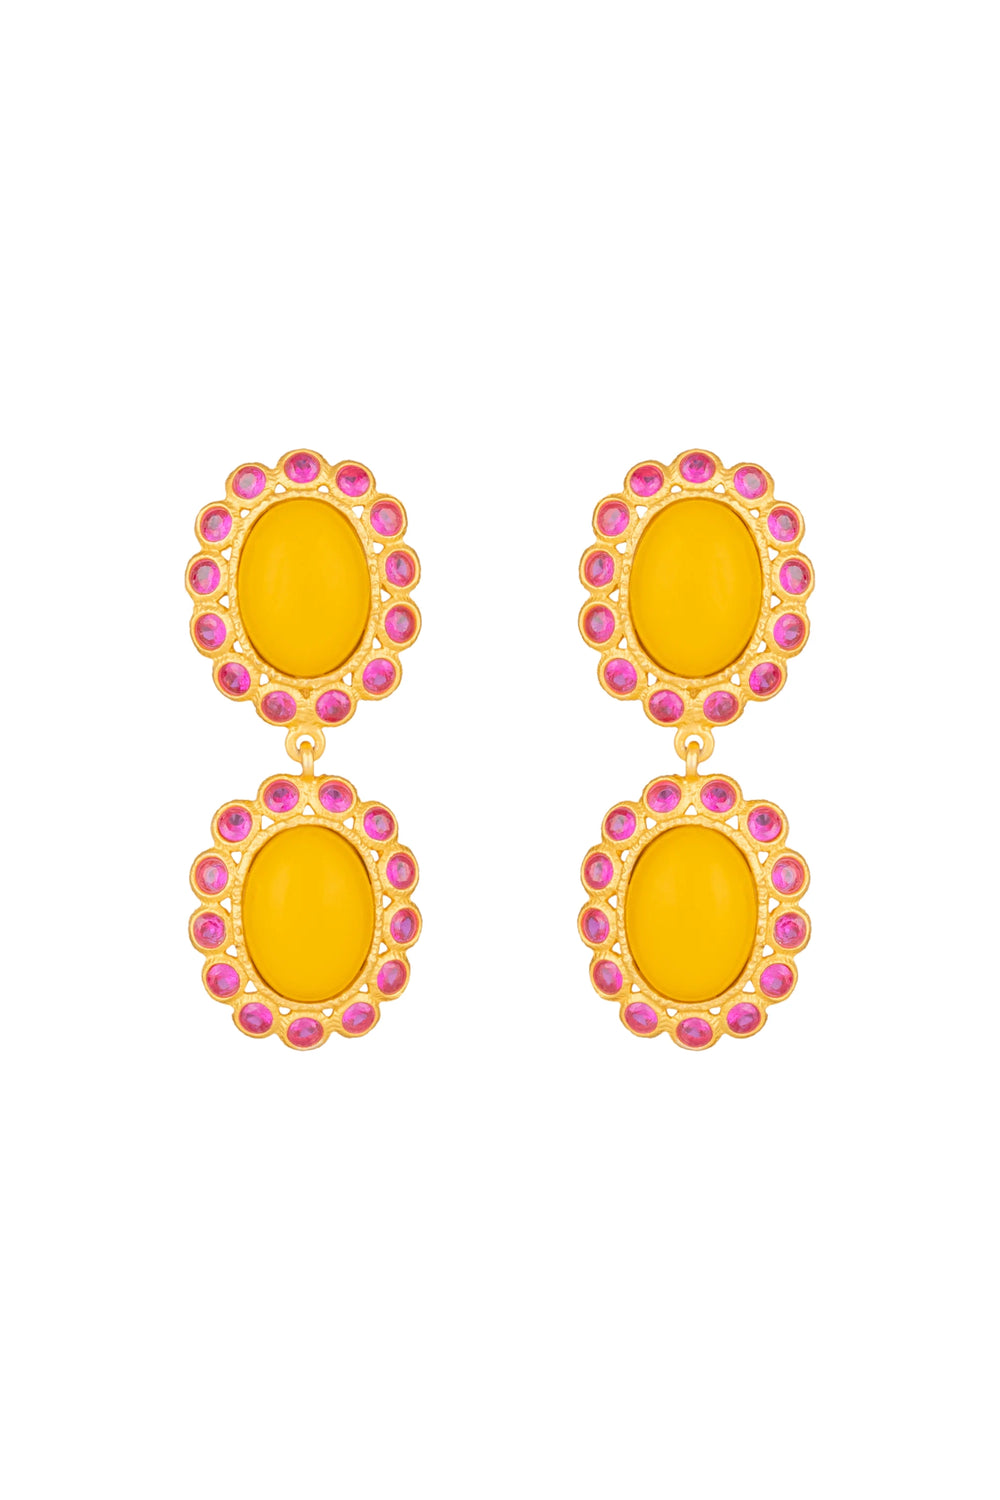 Ada Earrings Yellow and Pink Crystal